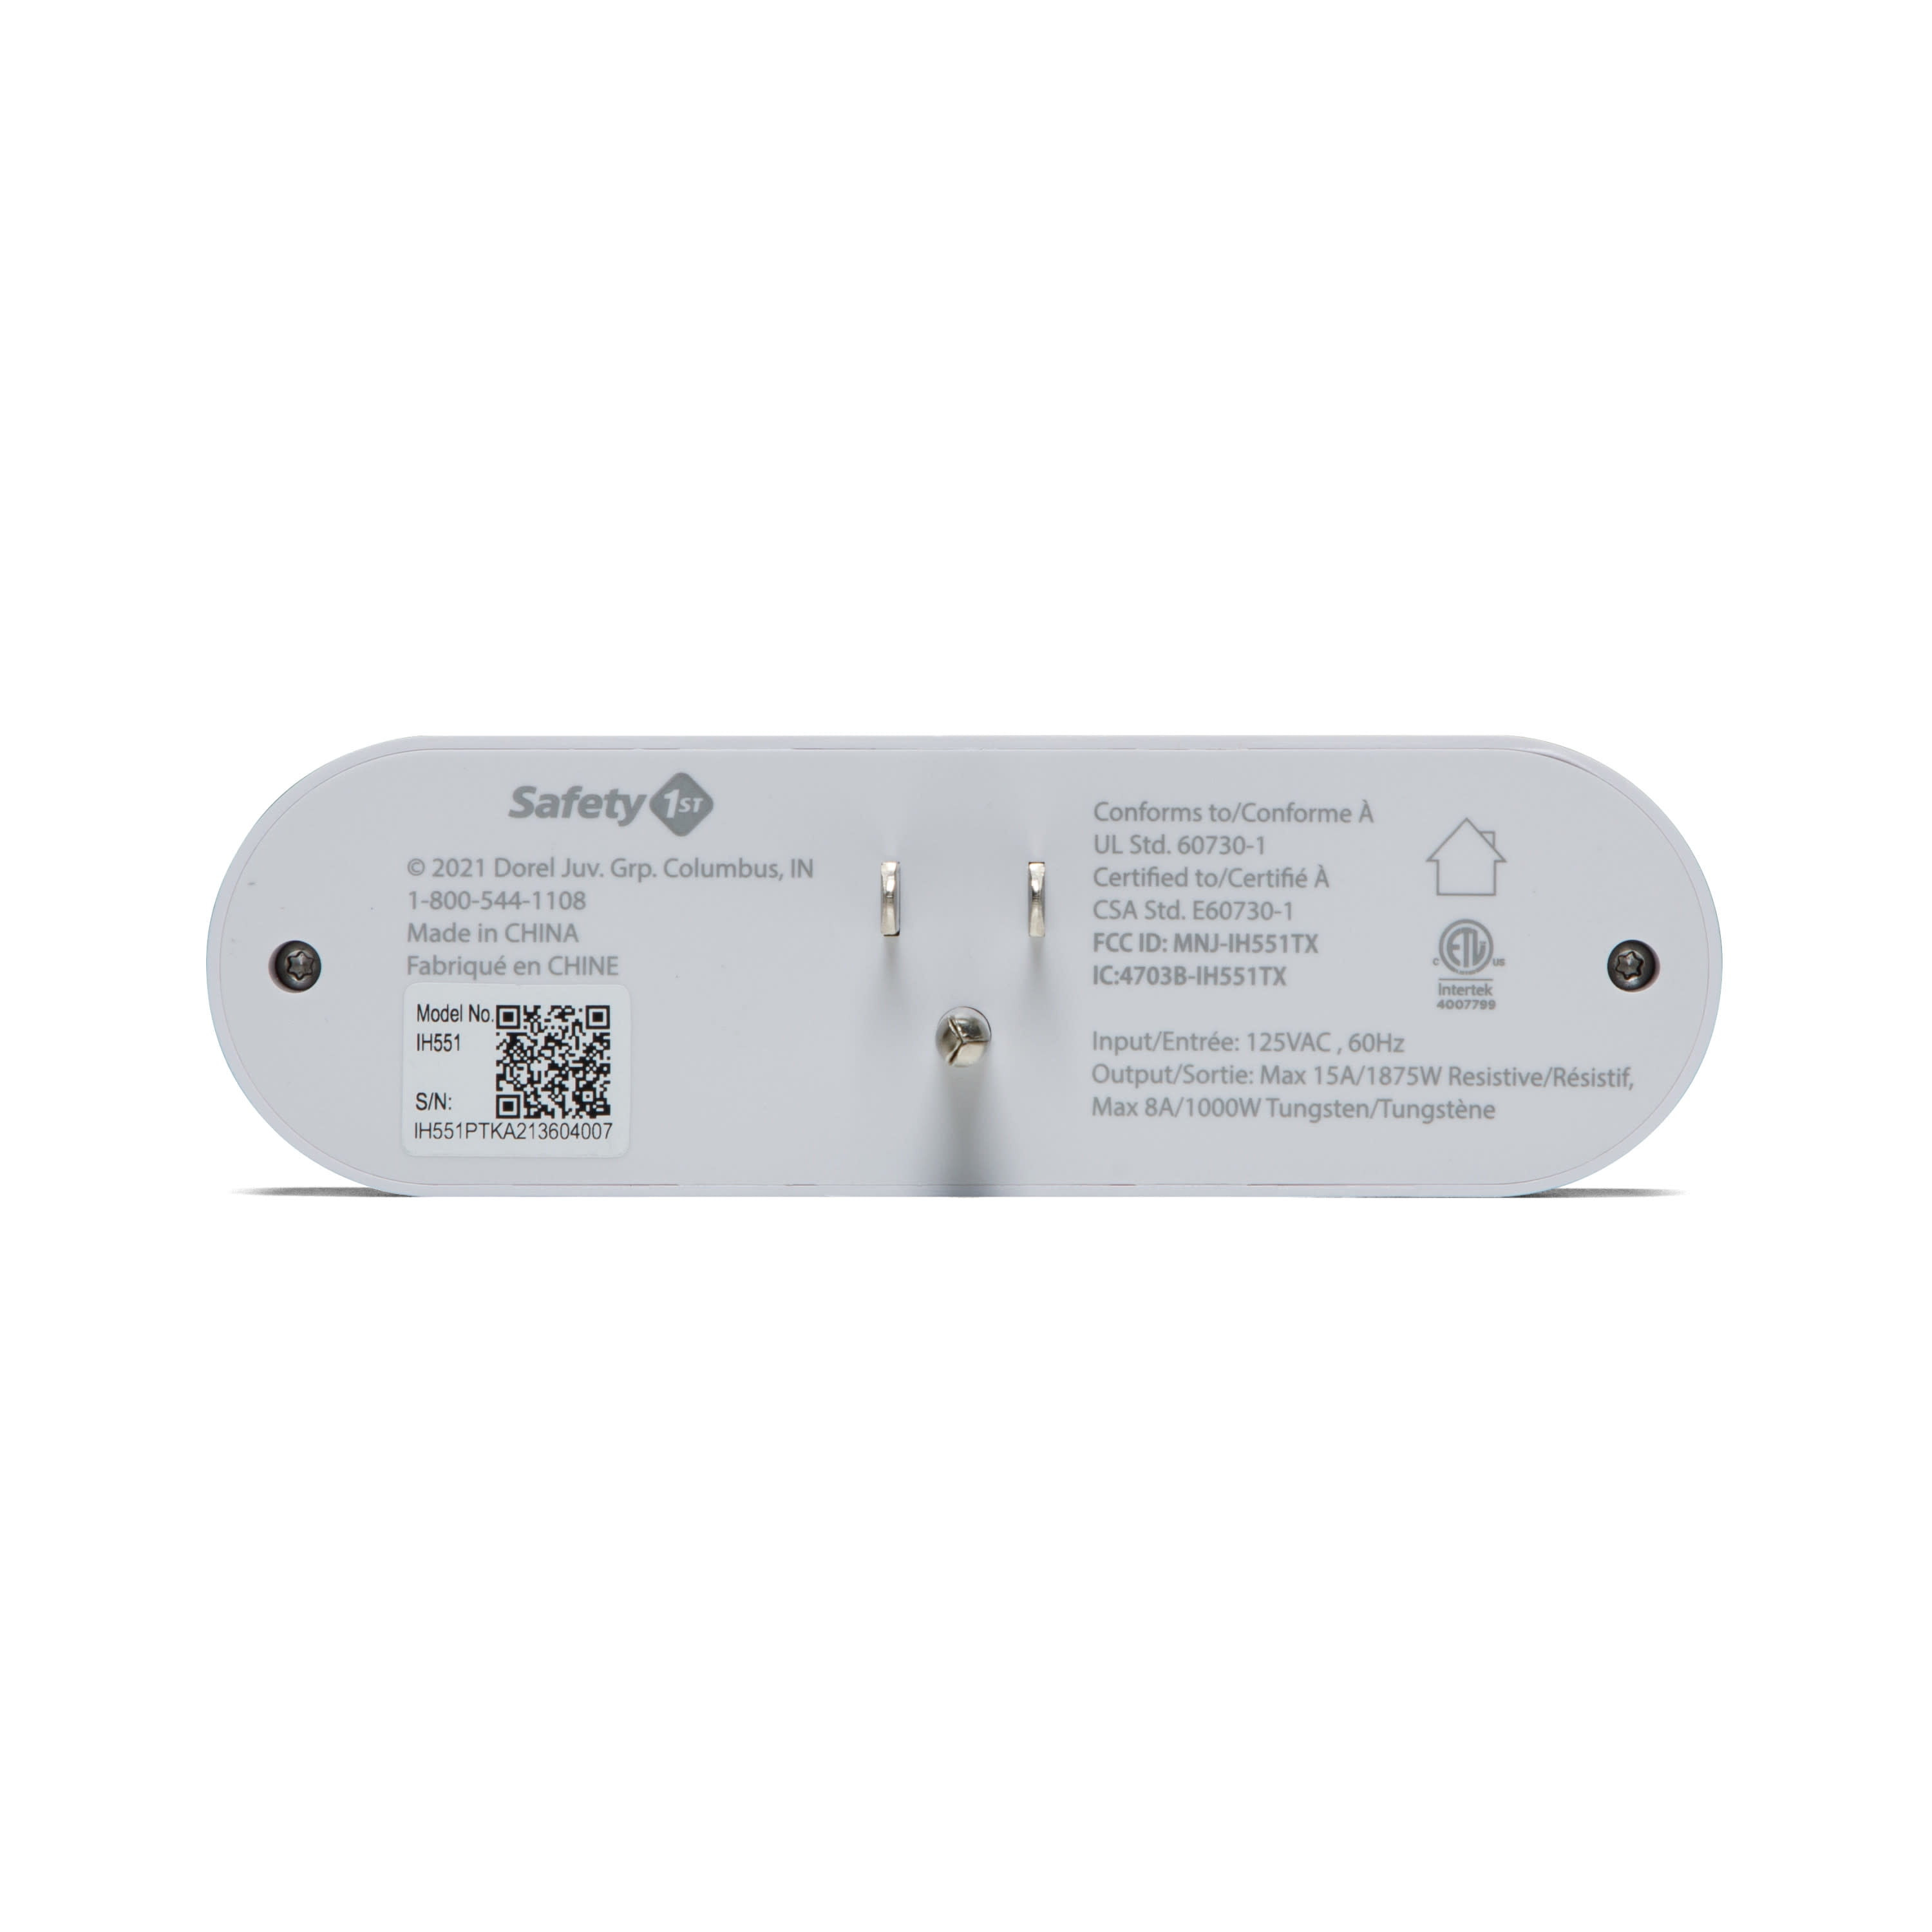 Tesler E-Z Control White 1-Plug Wireless Remote Wall Outlet - #70W39